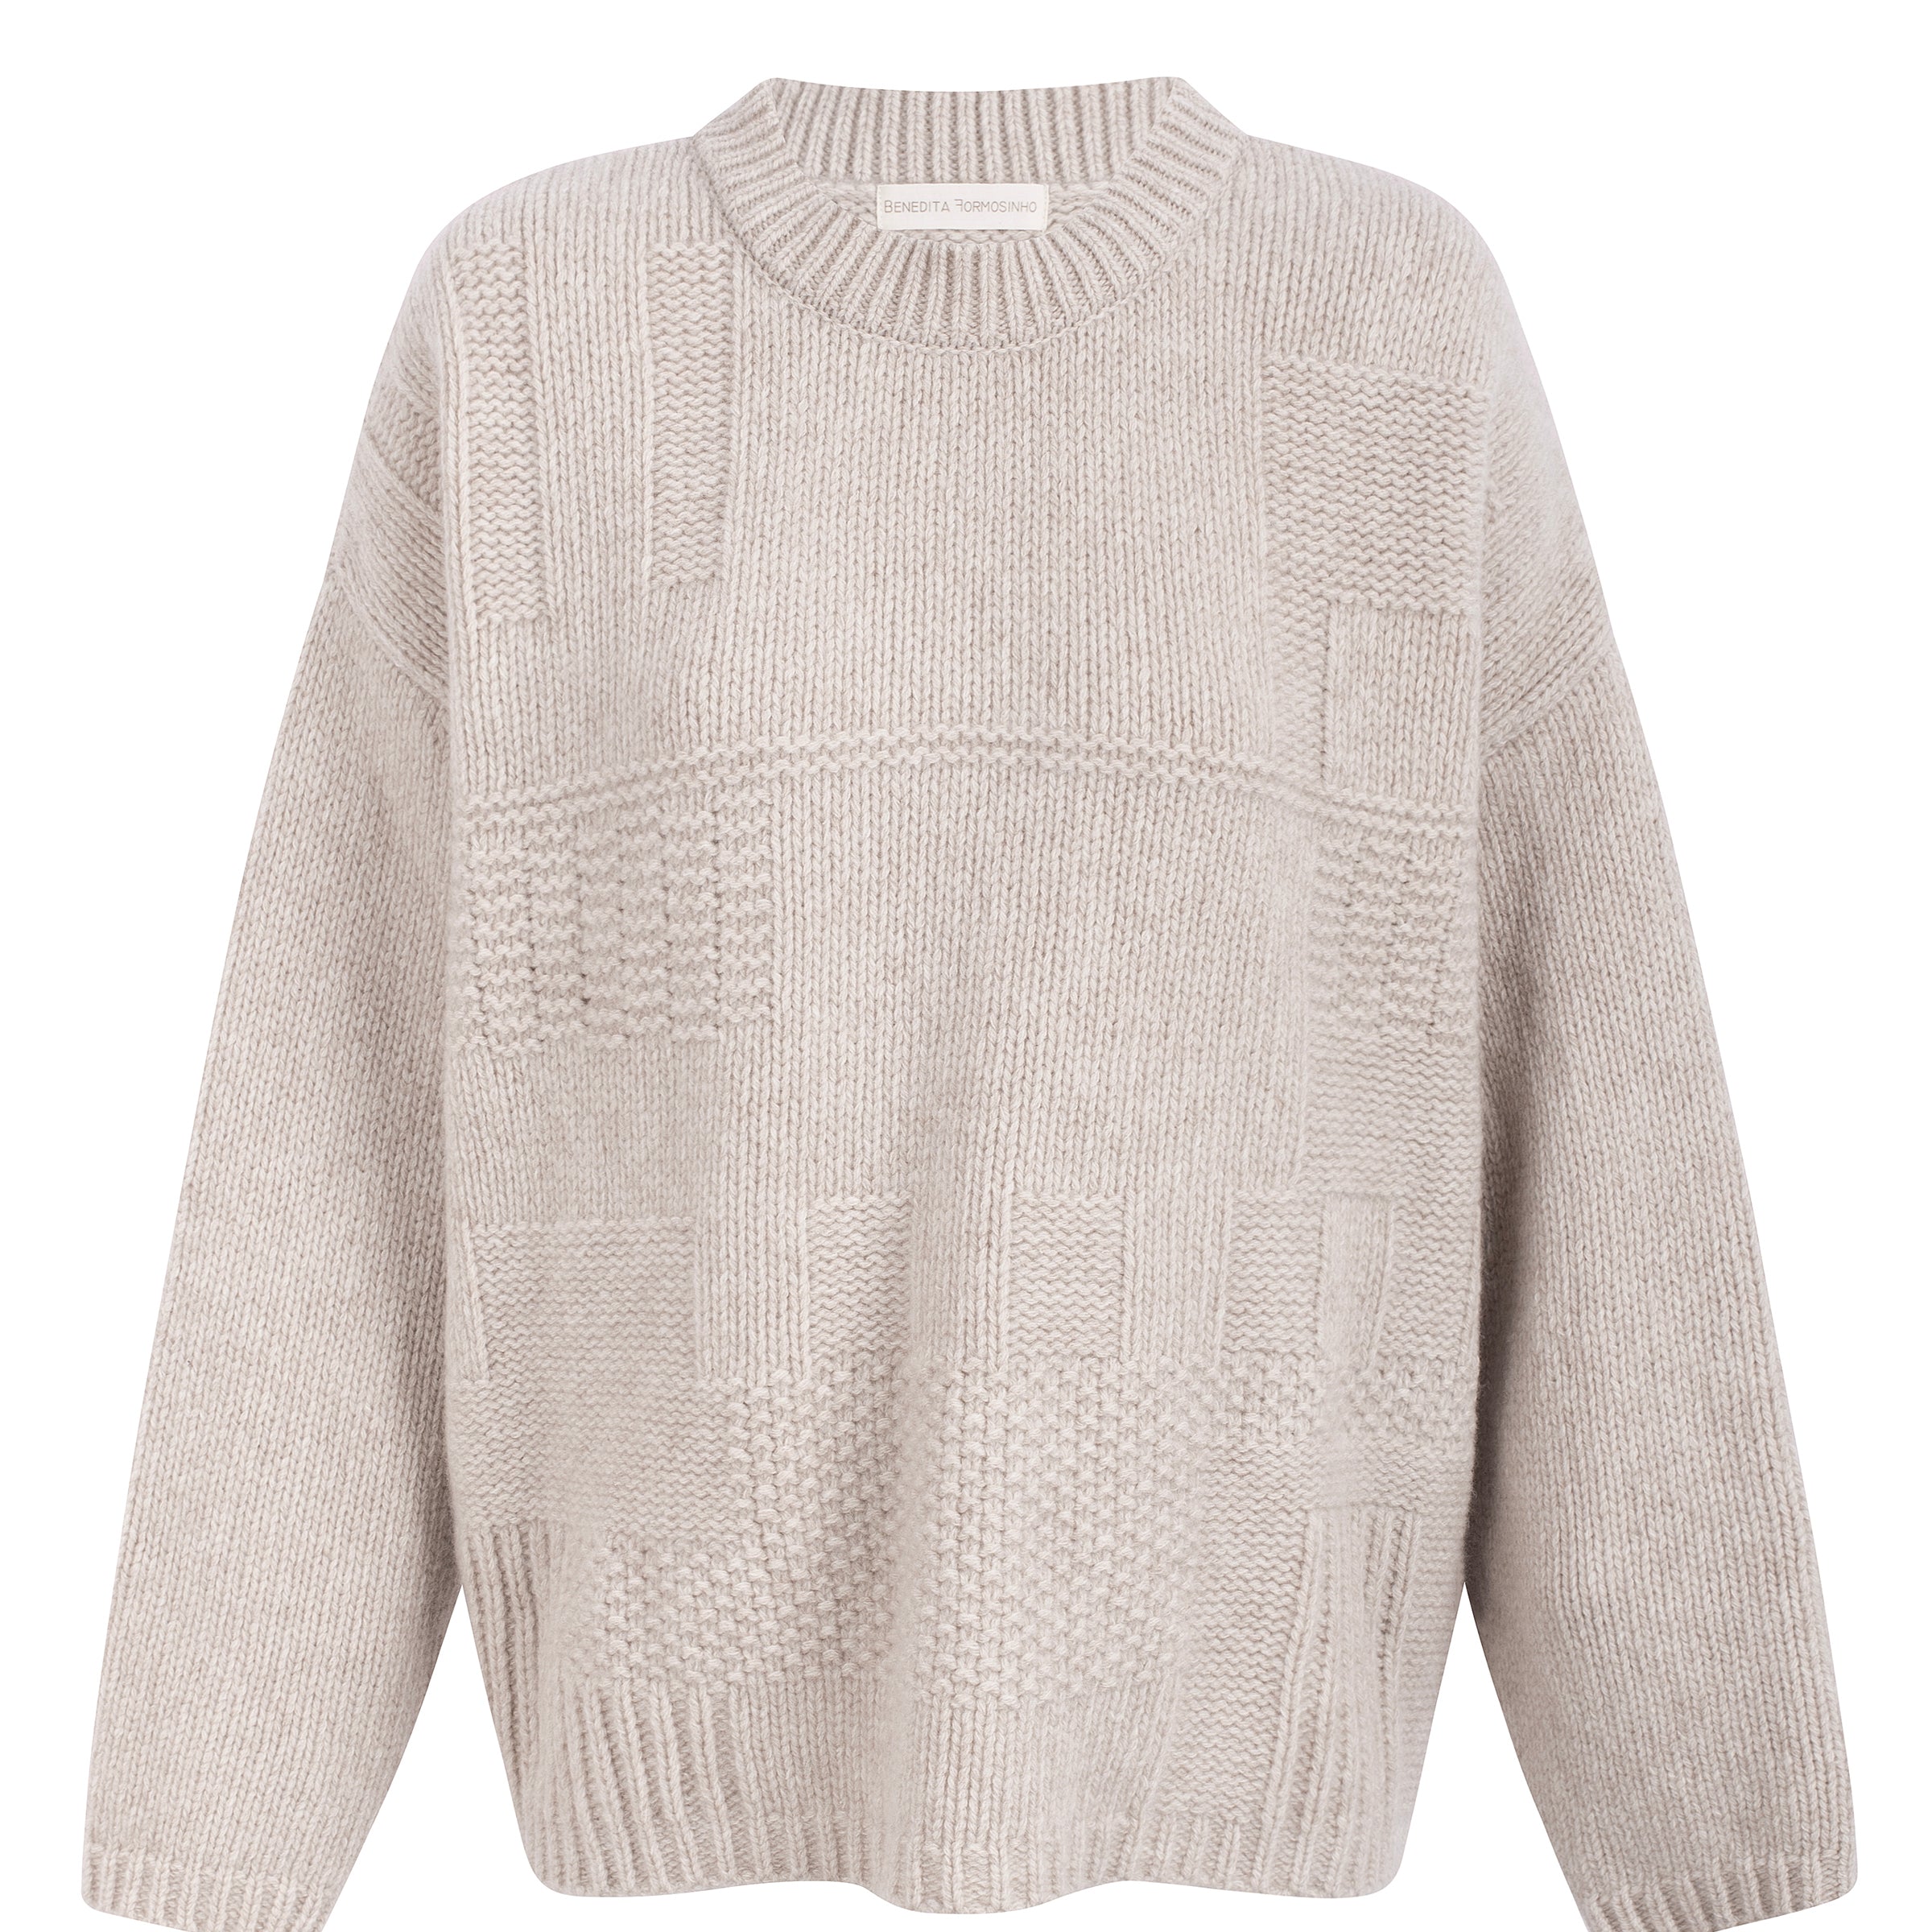 CLARA FERNANDO knit sweater